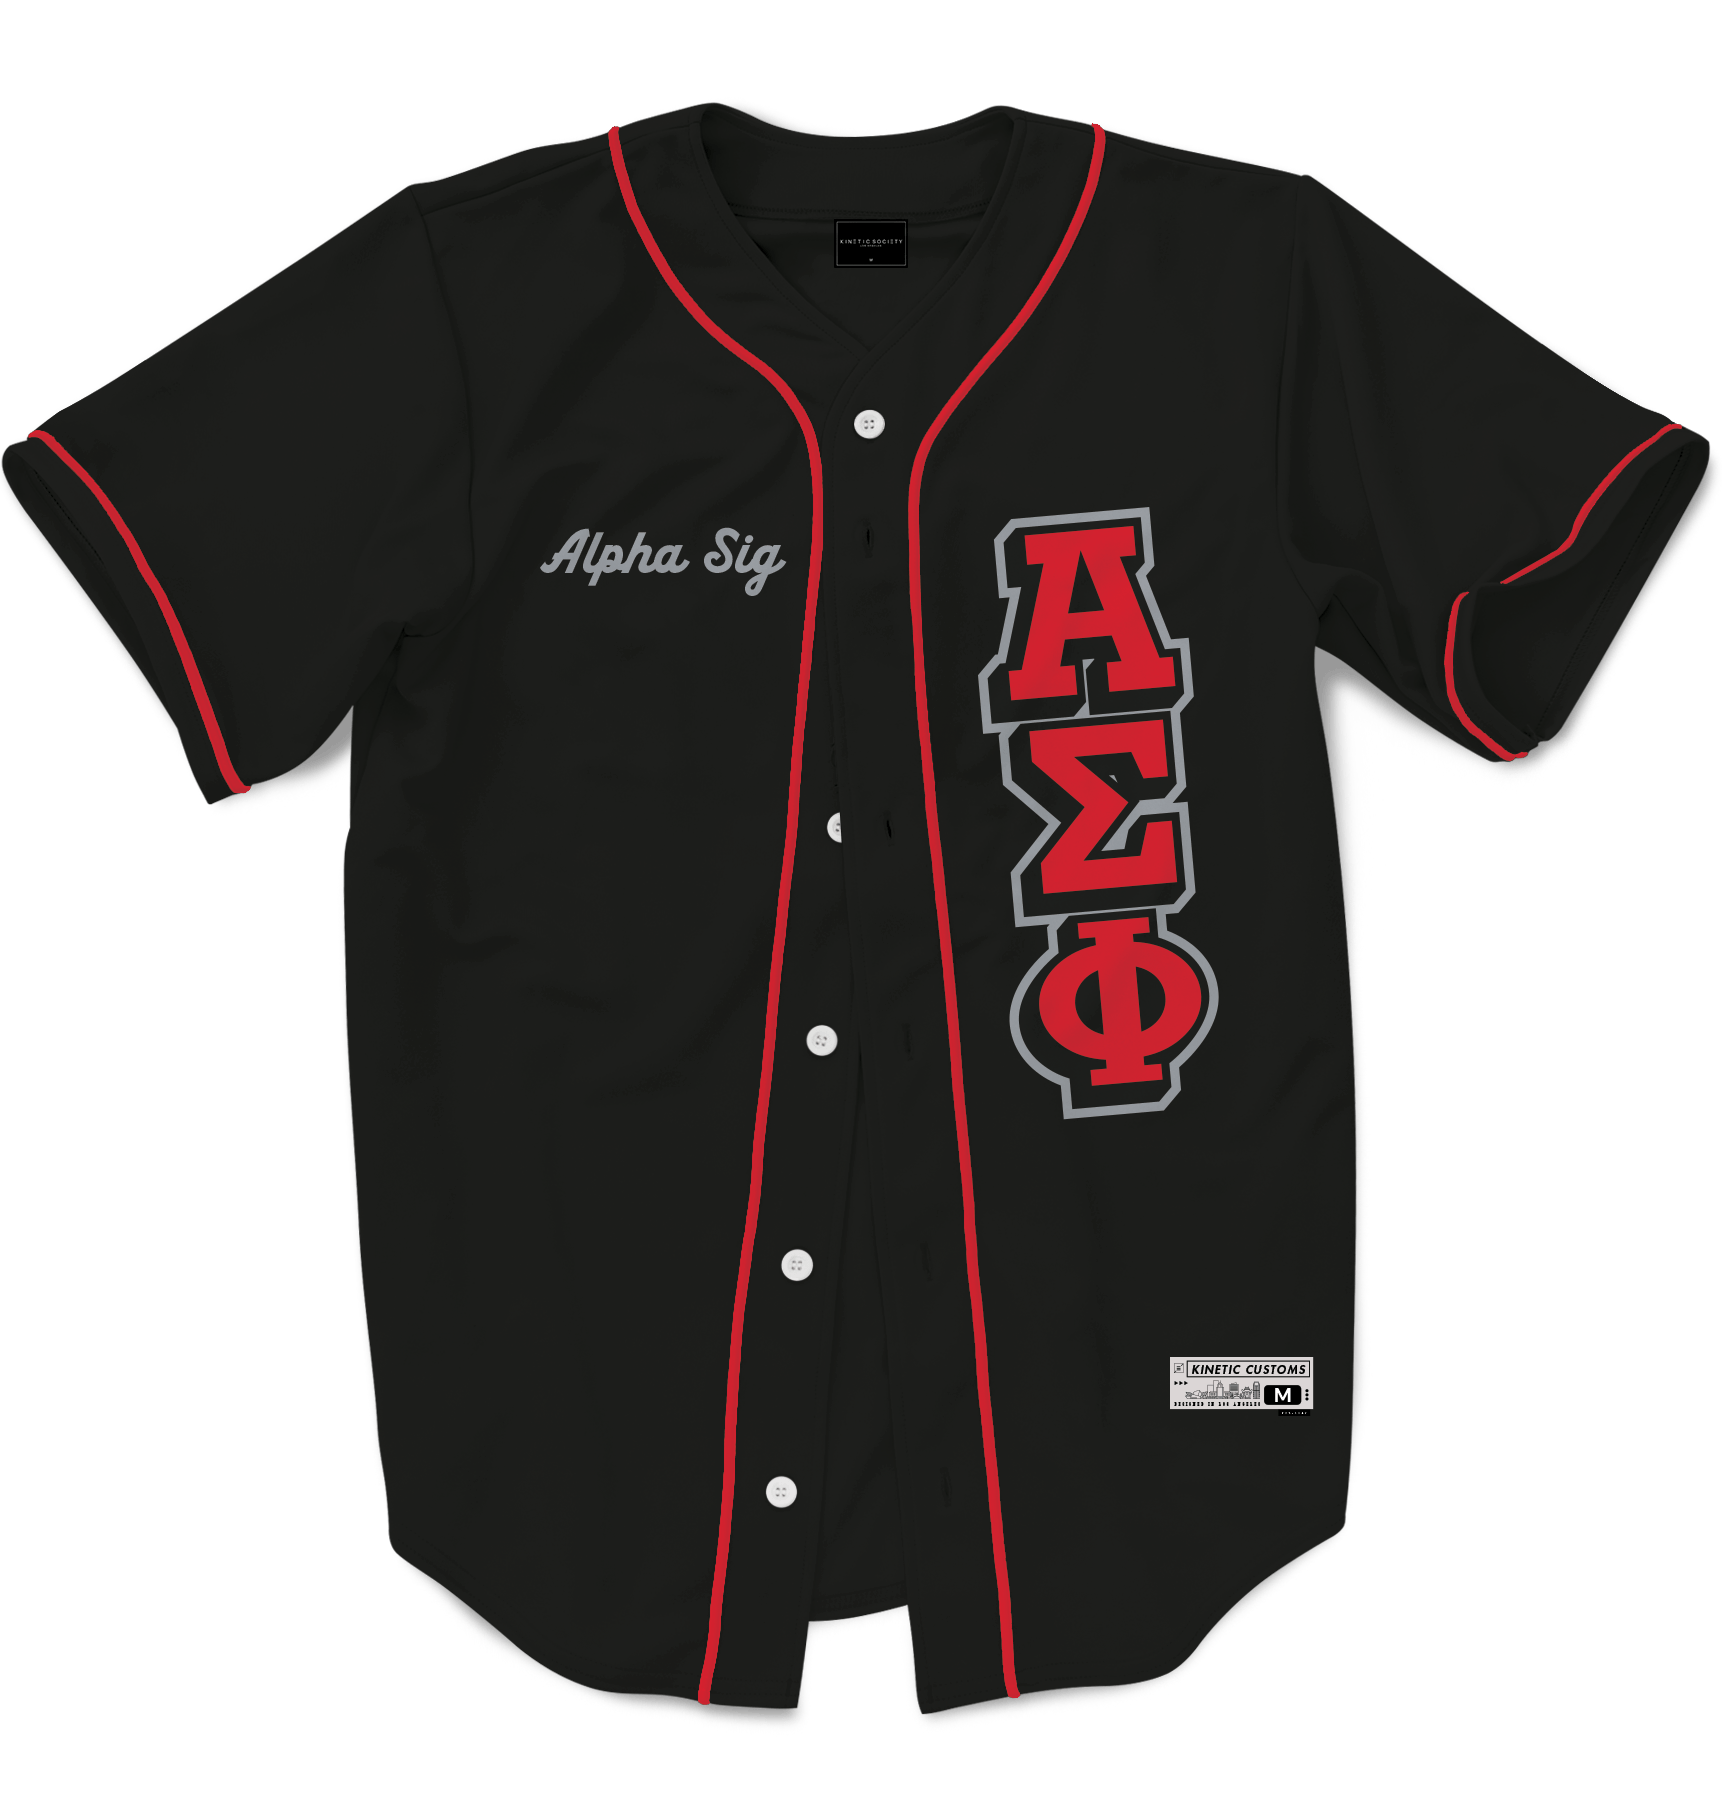 ALPHA SIGMA PHI - The Block Baseball Jersey Premium Baseball Kinetic Society LLC 